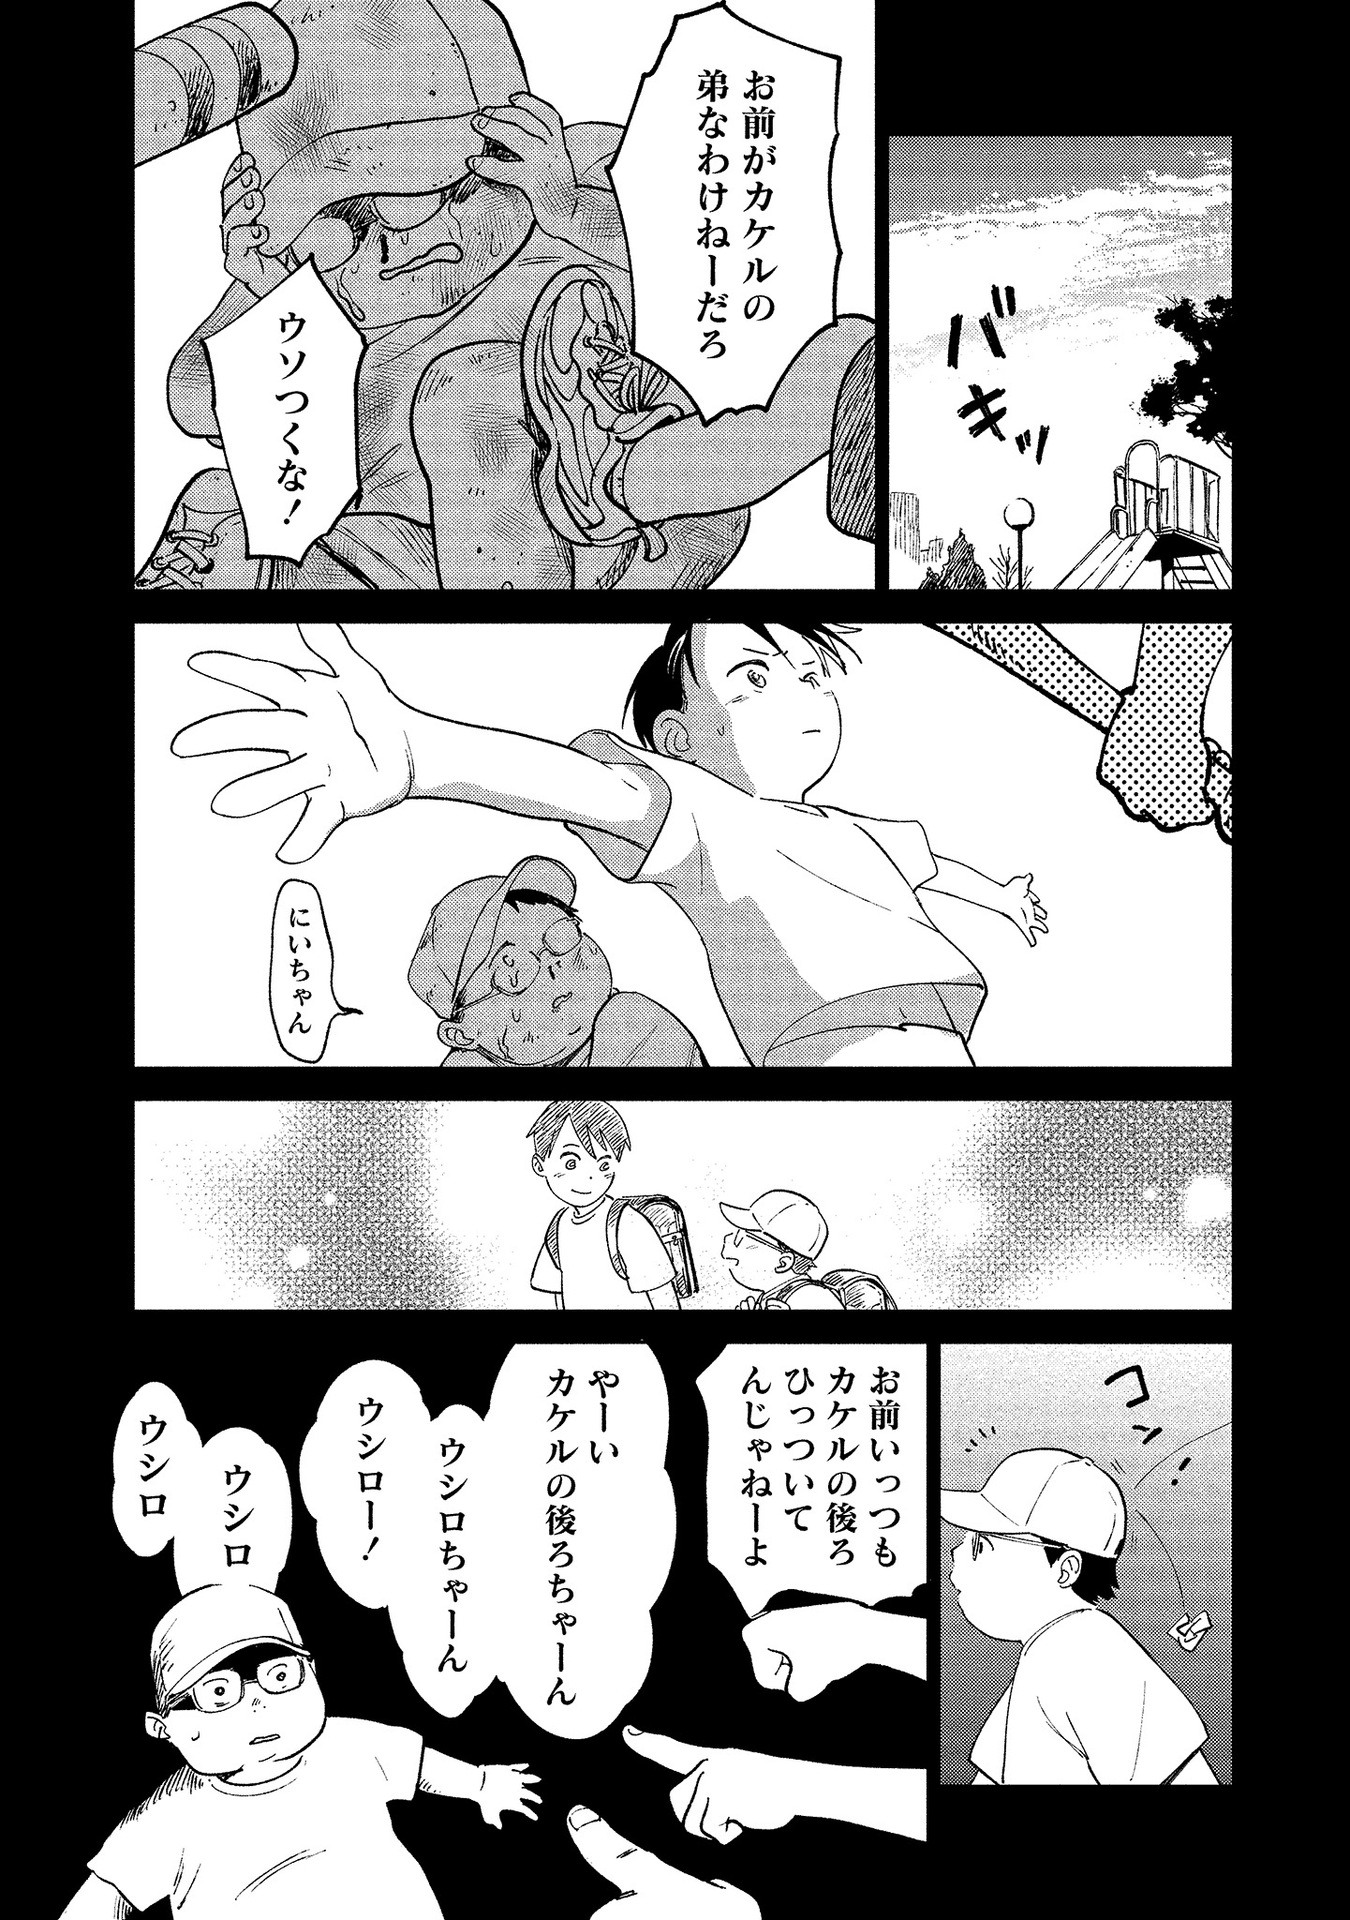 Chikai no Noah - Chapter 11 - Page 2